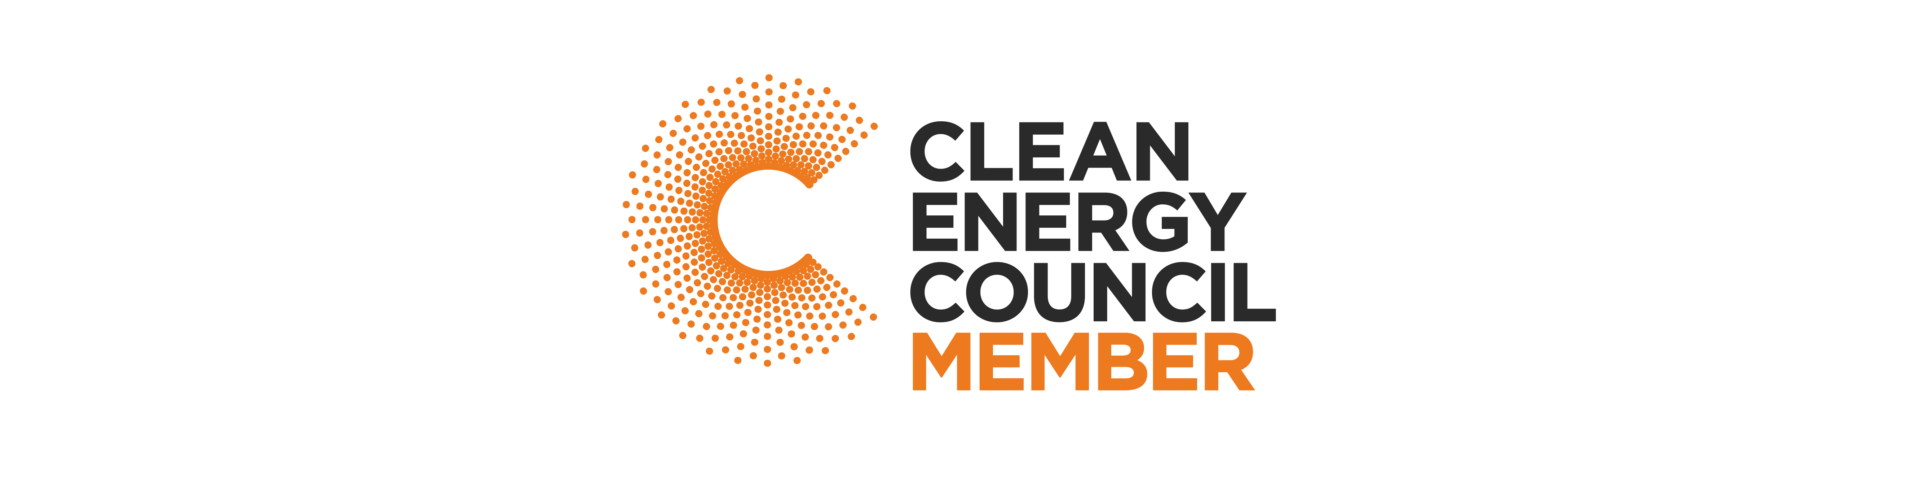 Clean energy council Member Logo